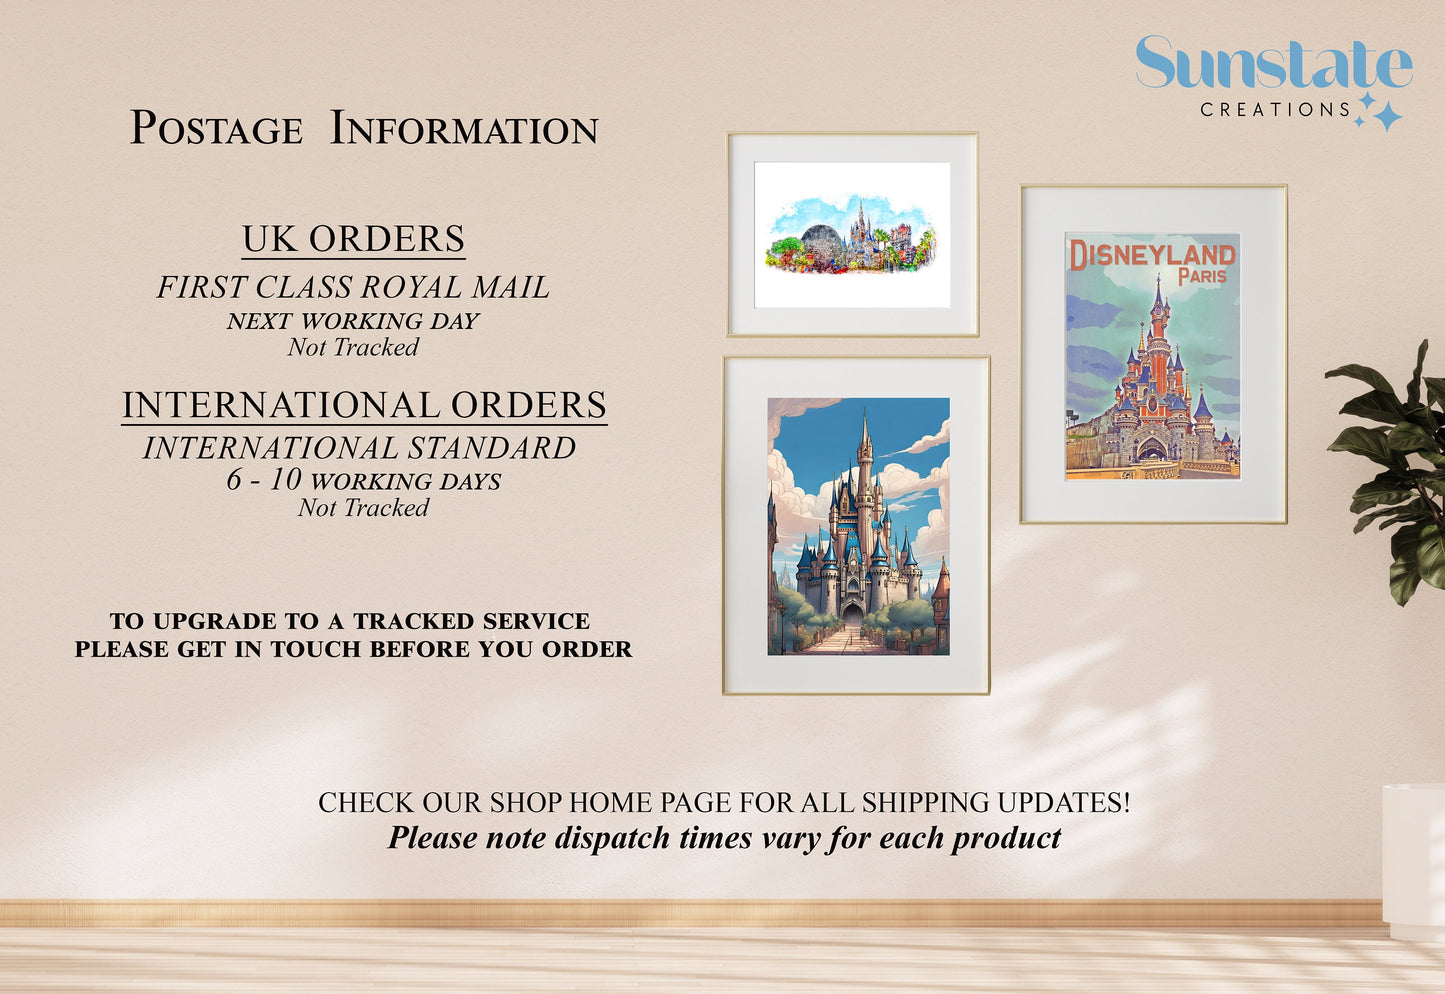 Magic Kingdom Disney Print, Black & White, Retro Disney Poster, Disney Gift, Disney World Prints, Disney Parks Posters A1, A2, A3, A4, A5